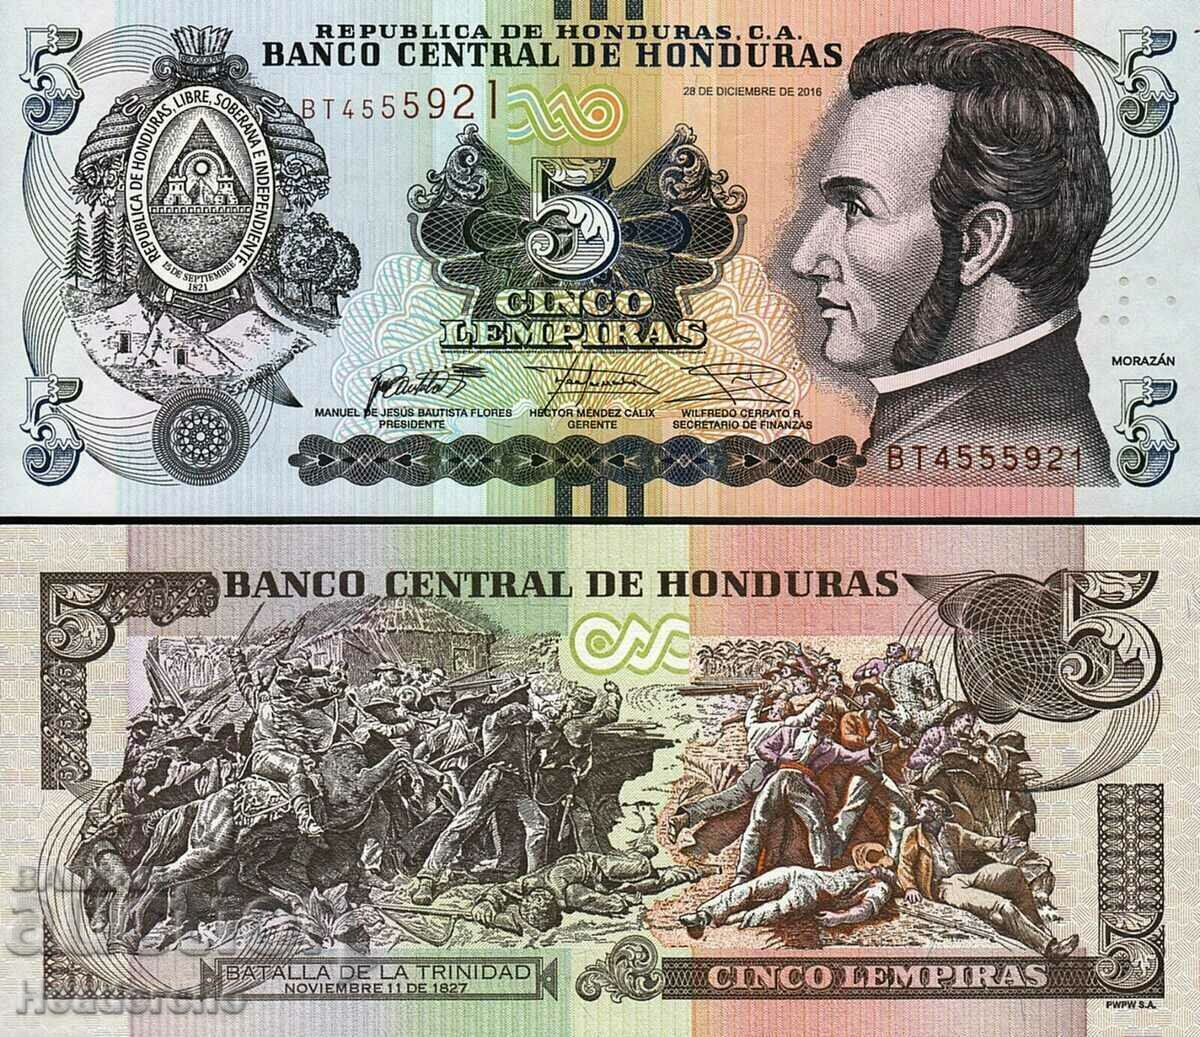 Lot of banknotes Ce͟n͟t͟r͟a͟l͟n͟a͟ i͟ Yu͟zh͟n͟a͟ A͟m͟e͟r͟i͟k͟a͟ -